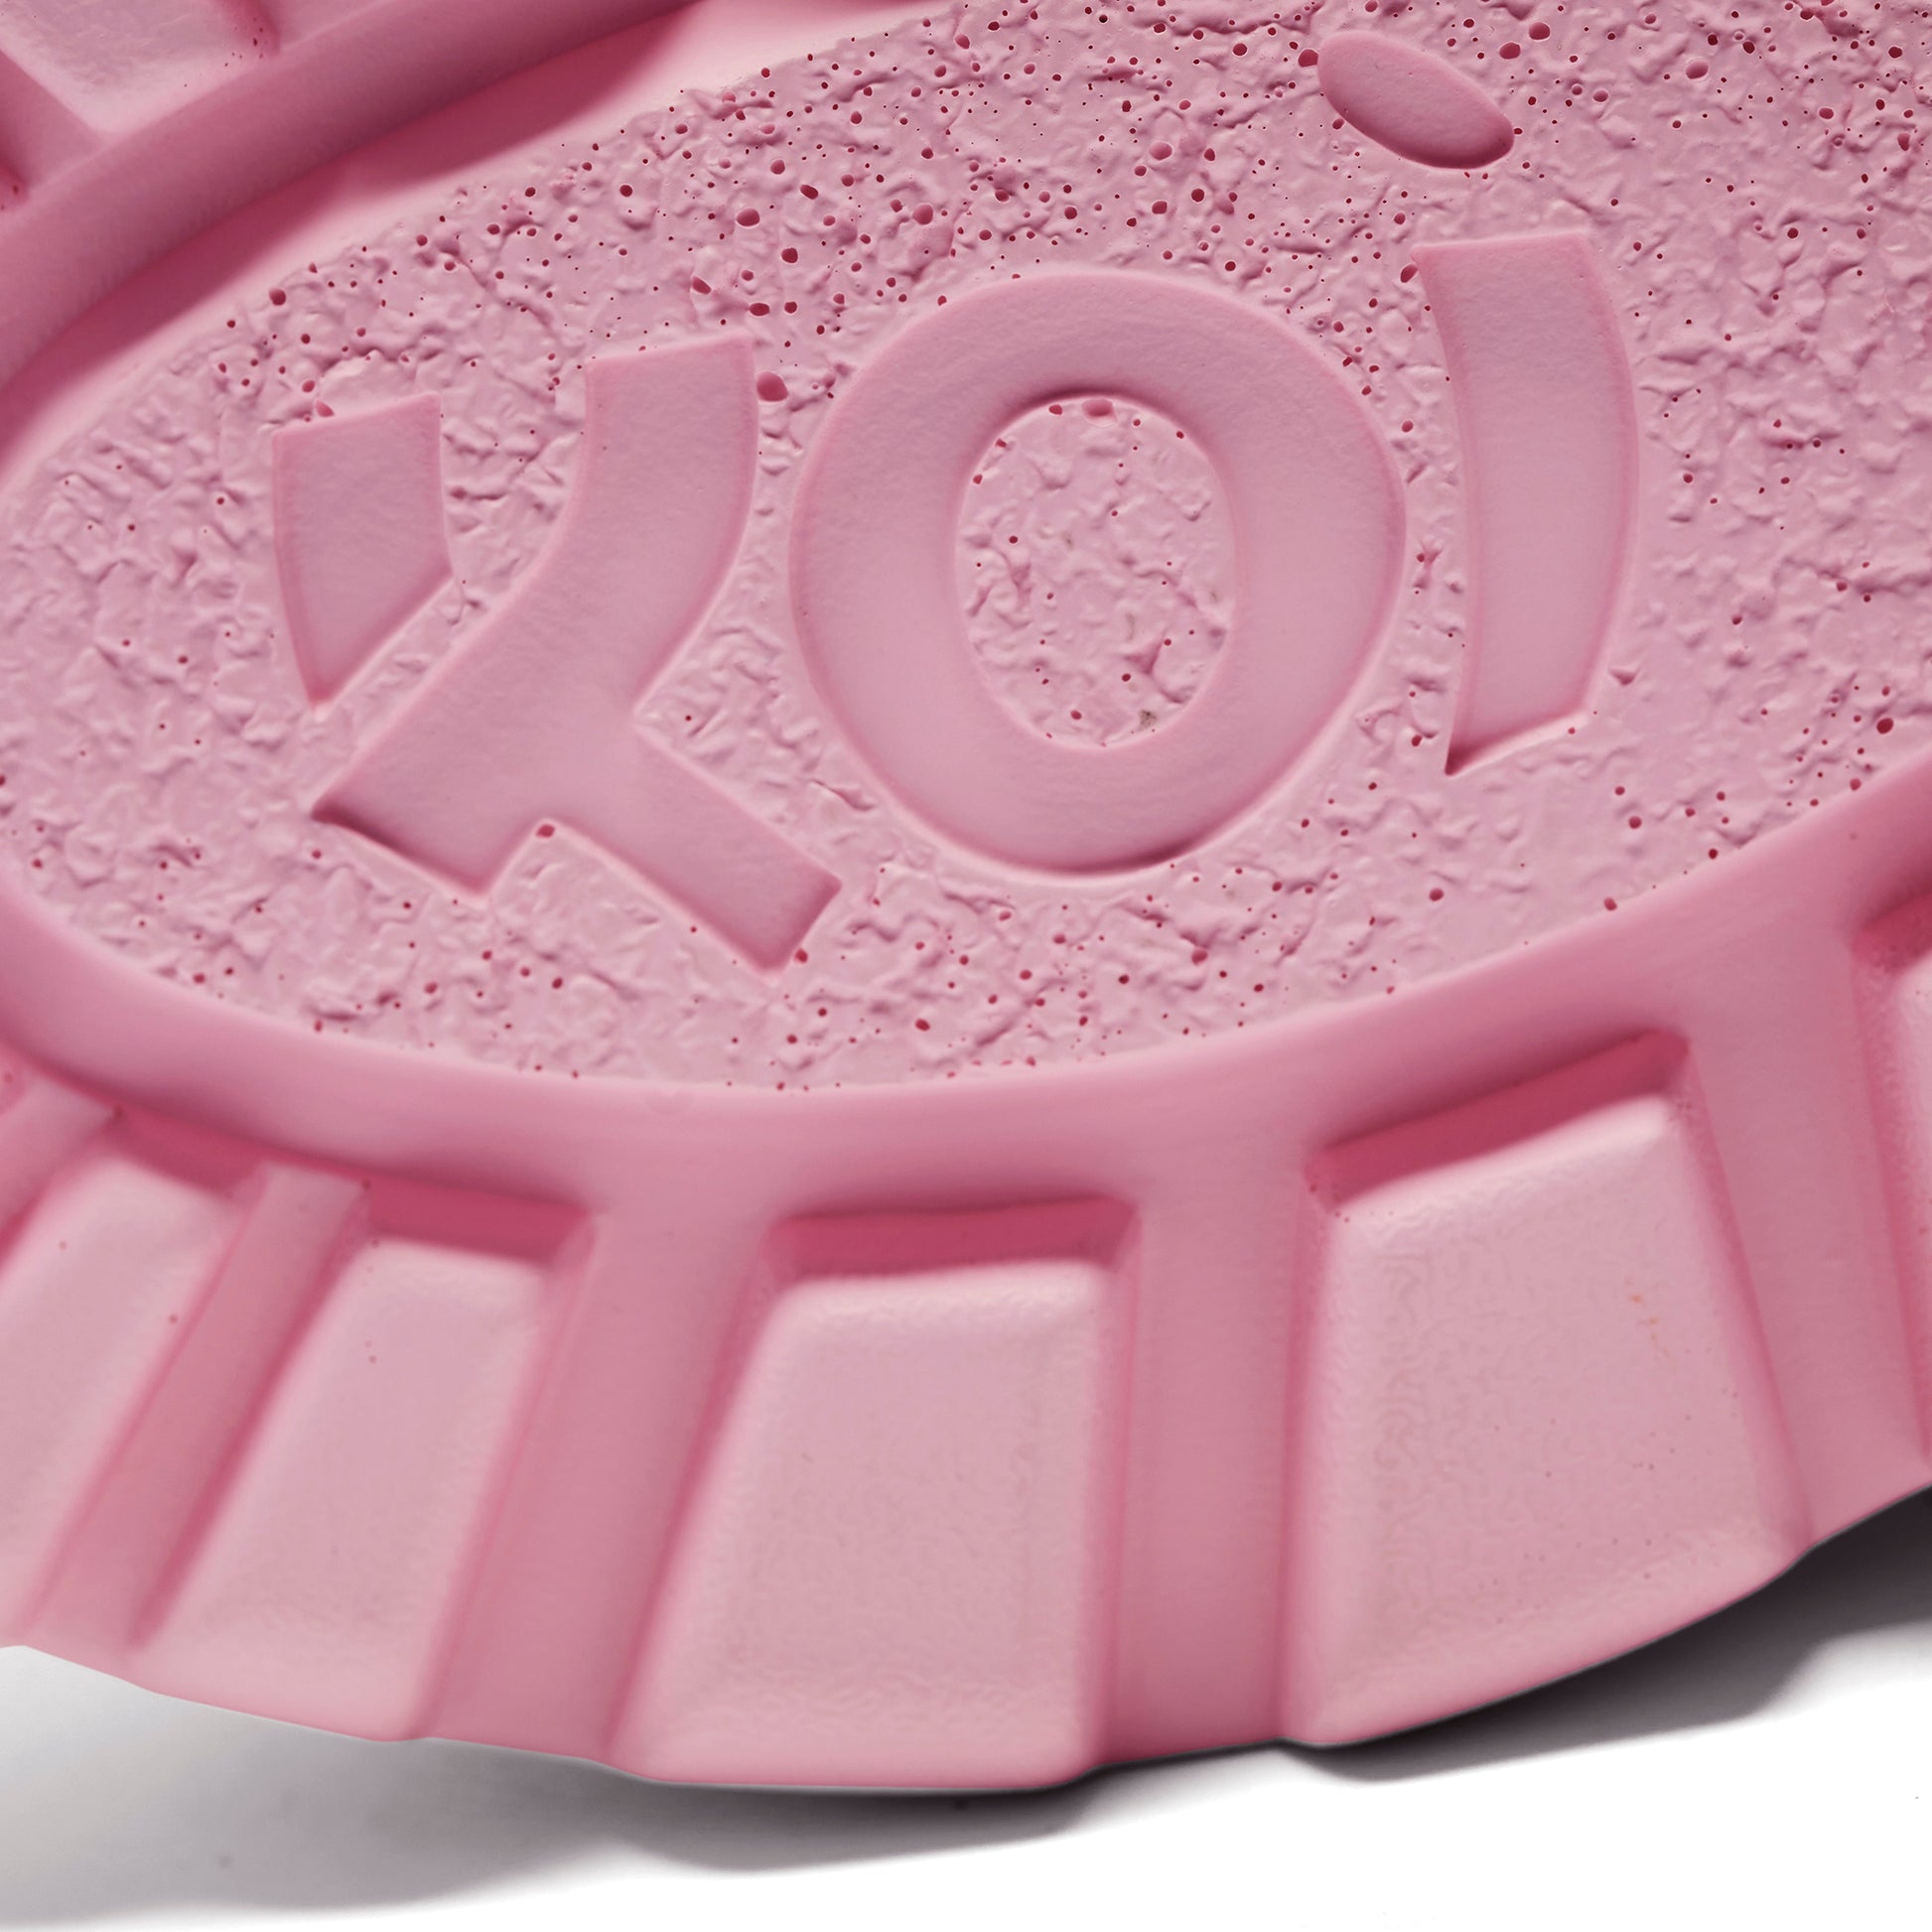 Haruna Pink Yami Trainers - Pink - KOI Footwear - Sole View